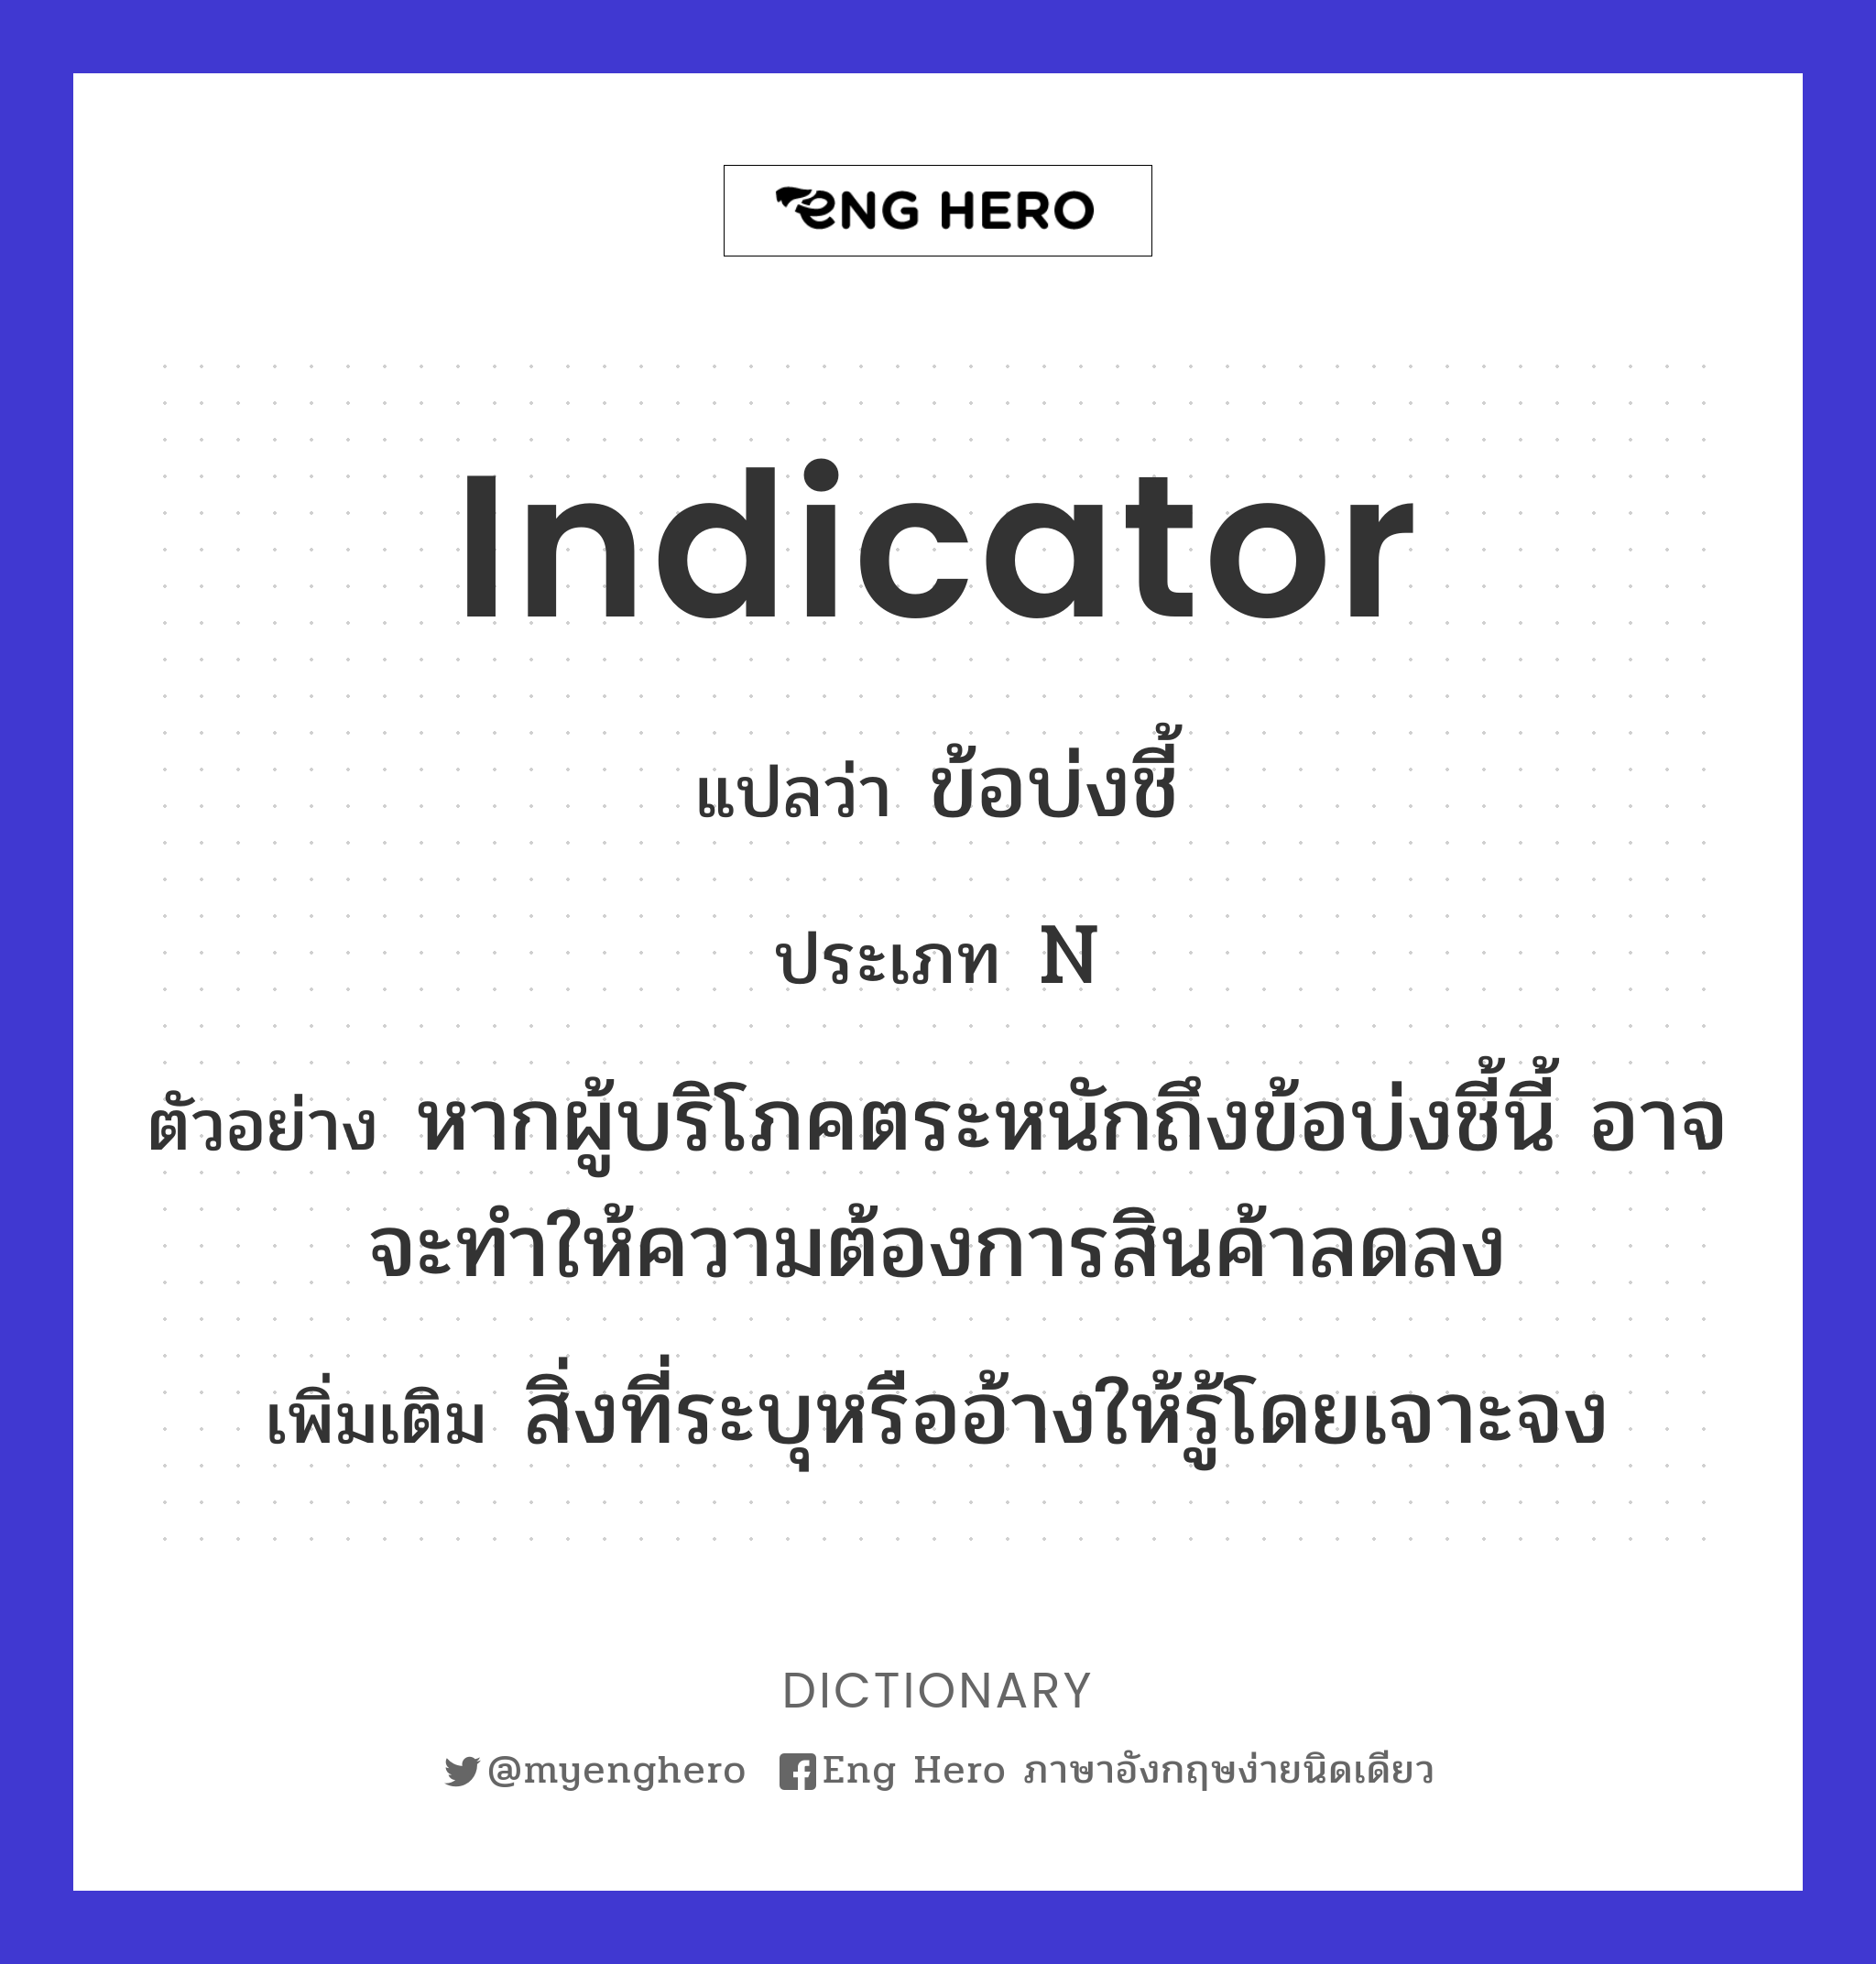 indicator